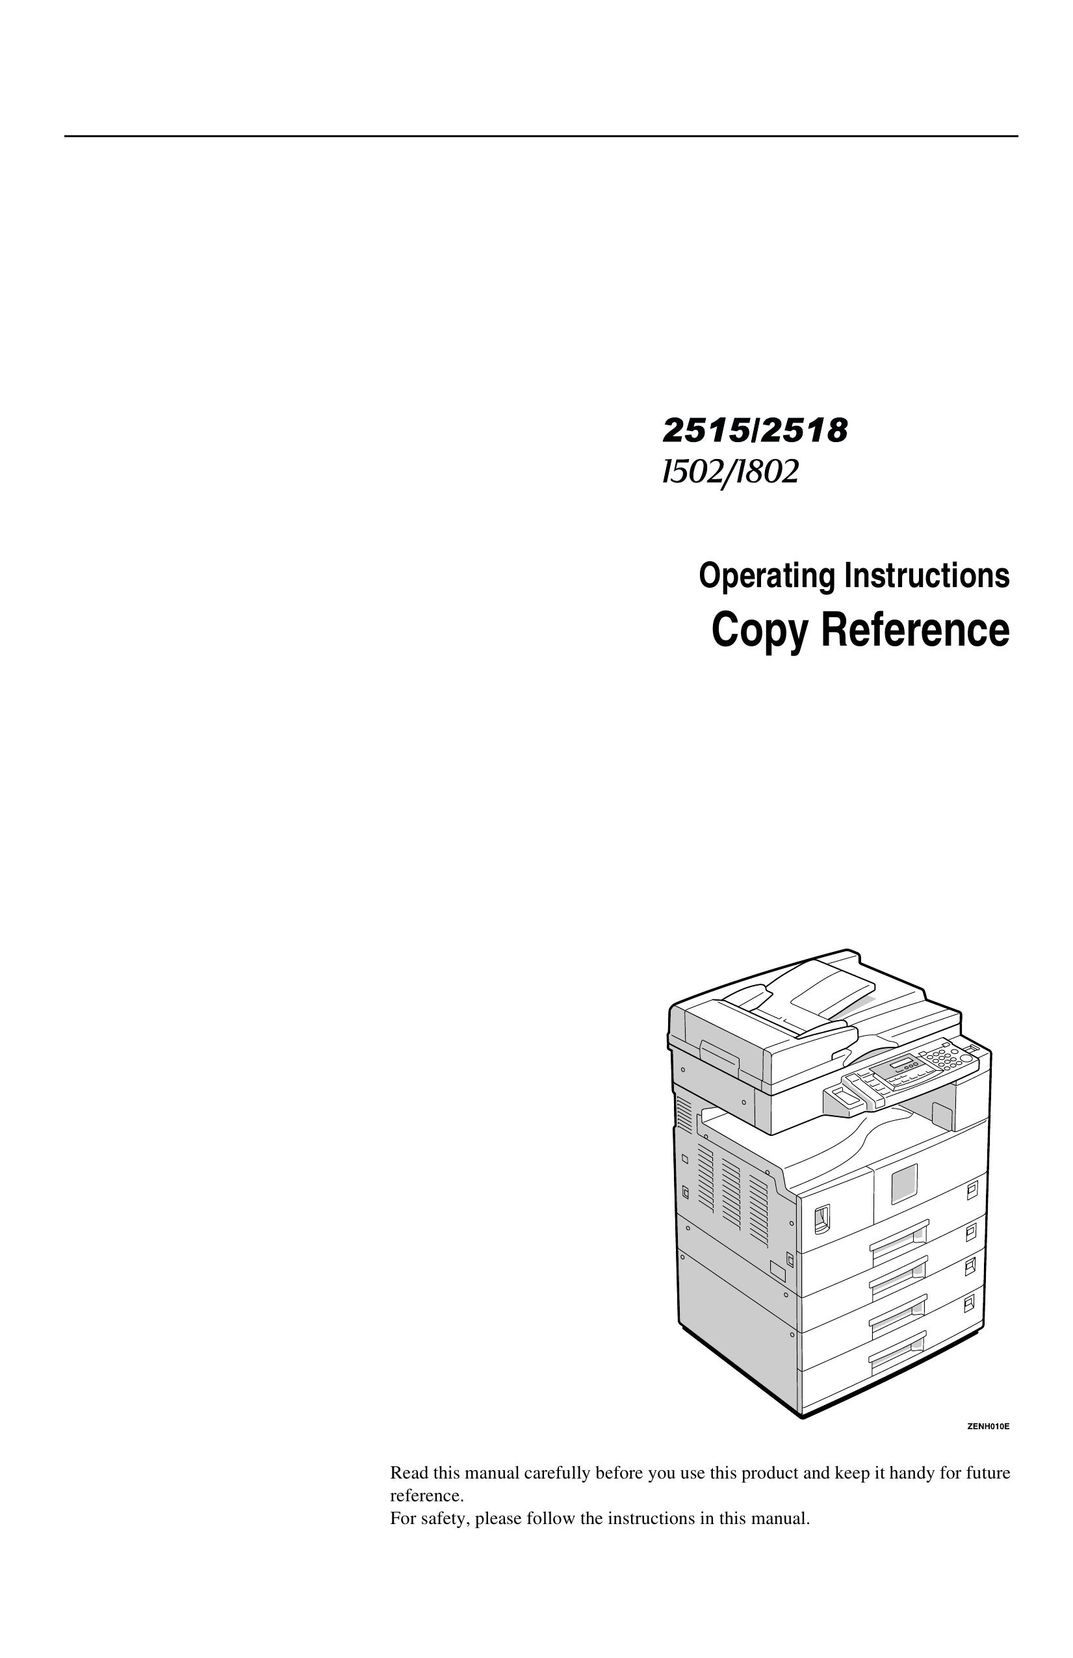 Savin 2515 Printer User Manual (Page 1)